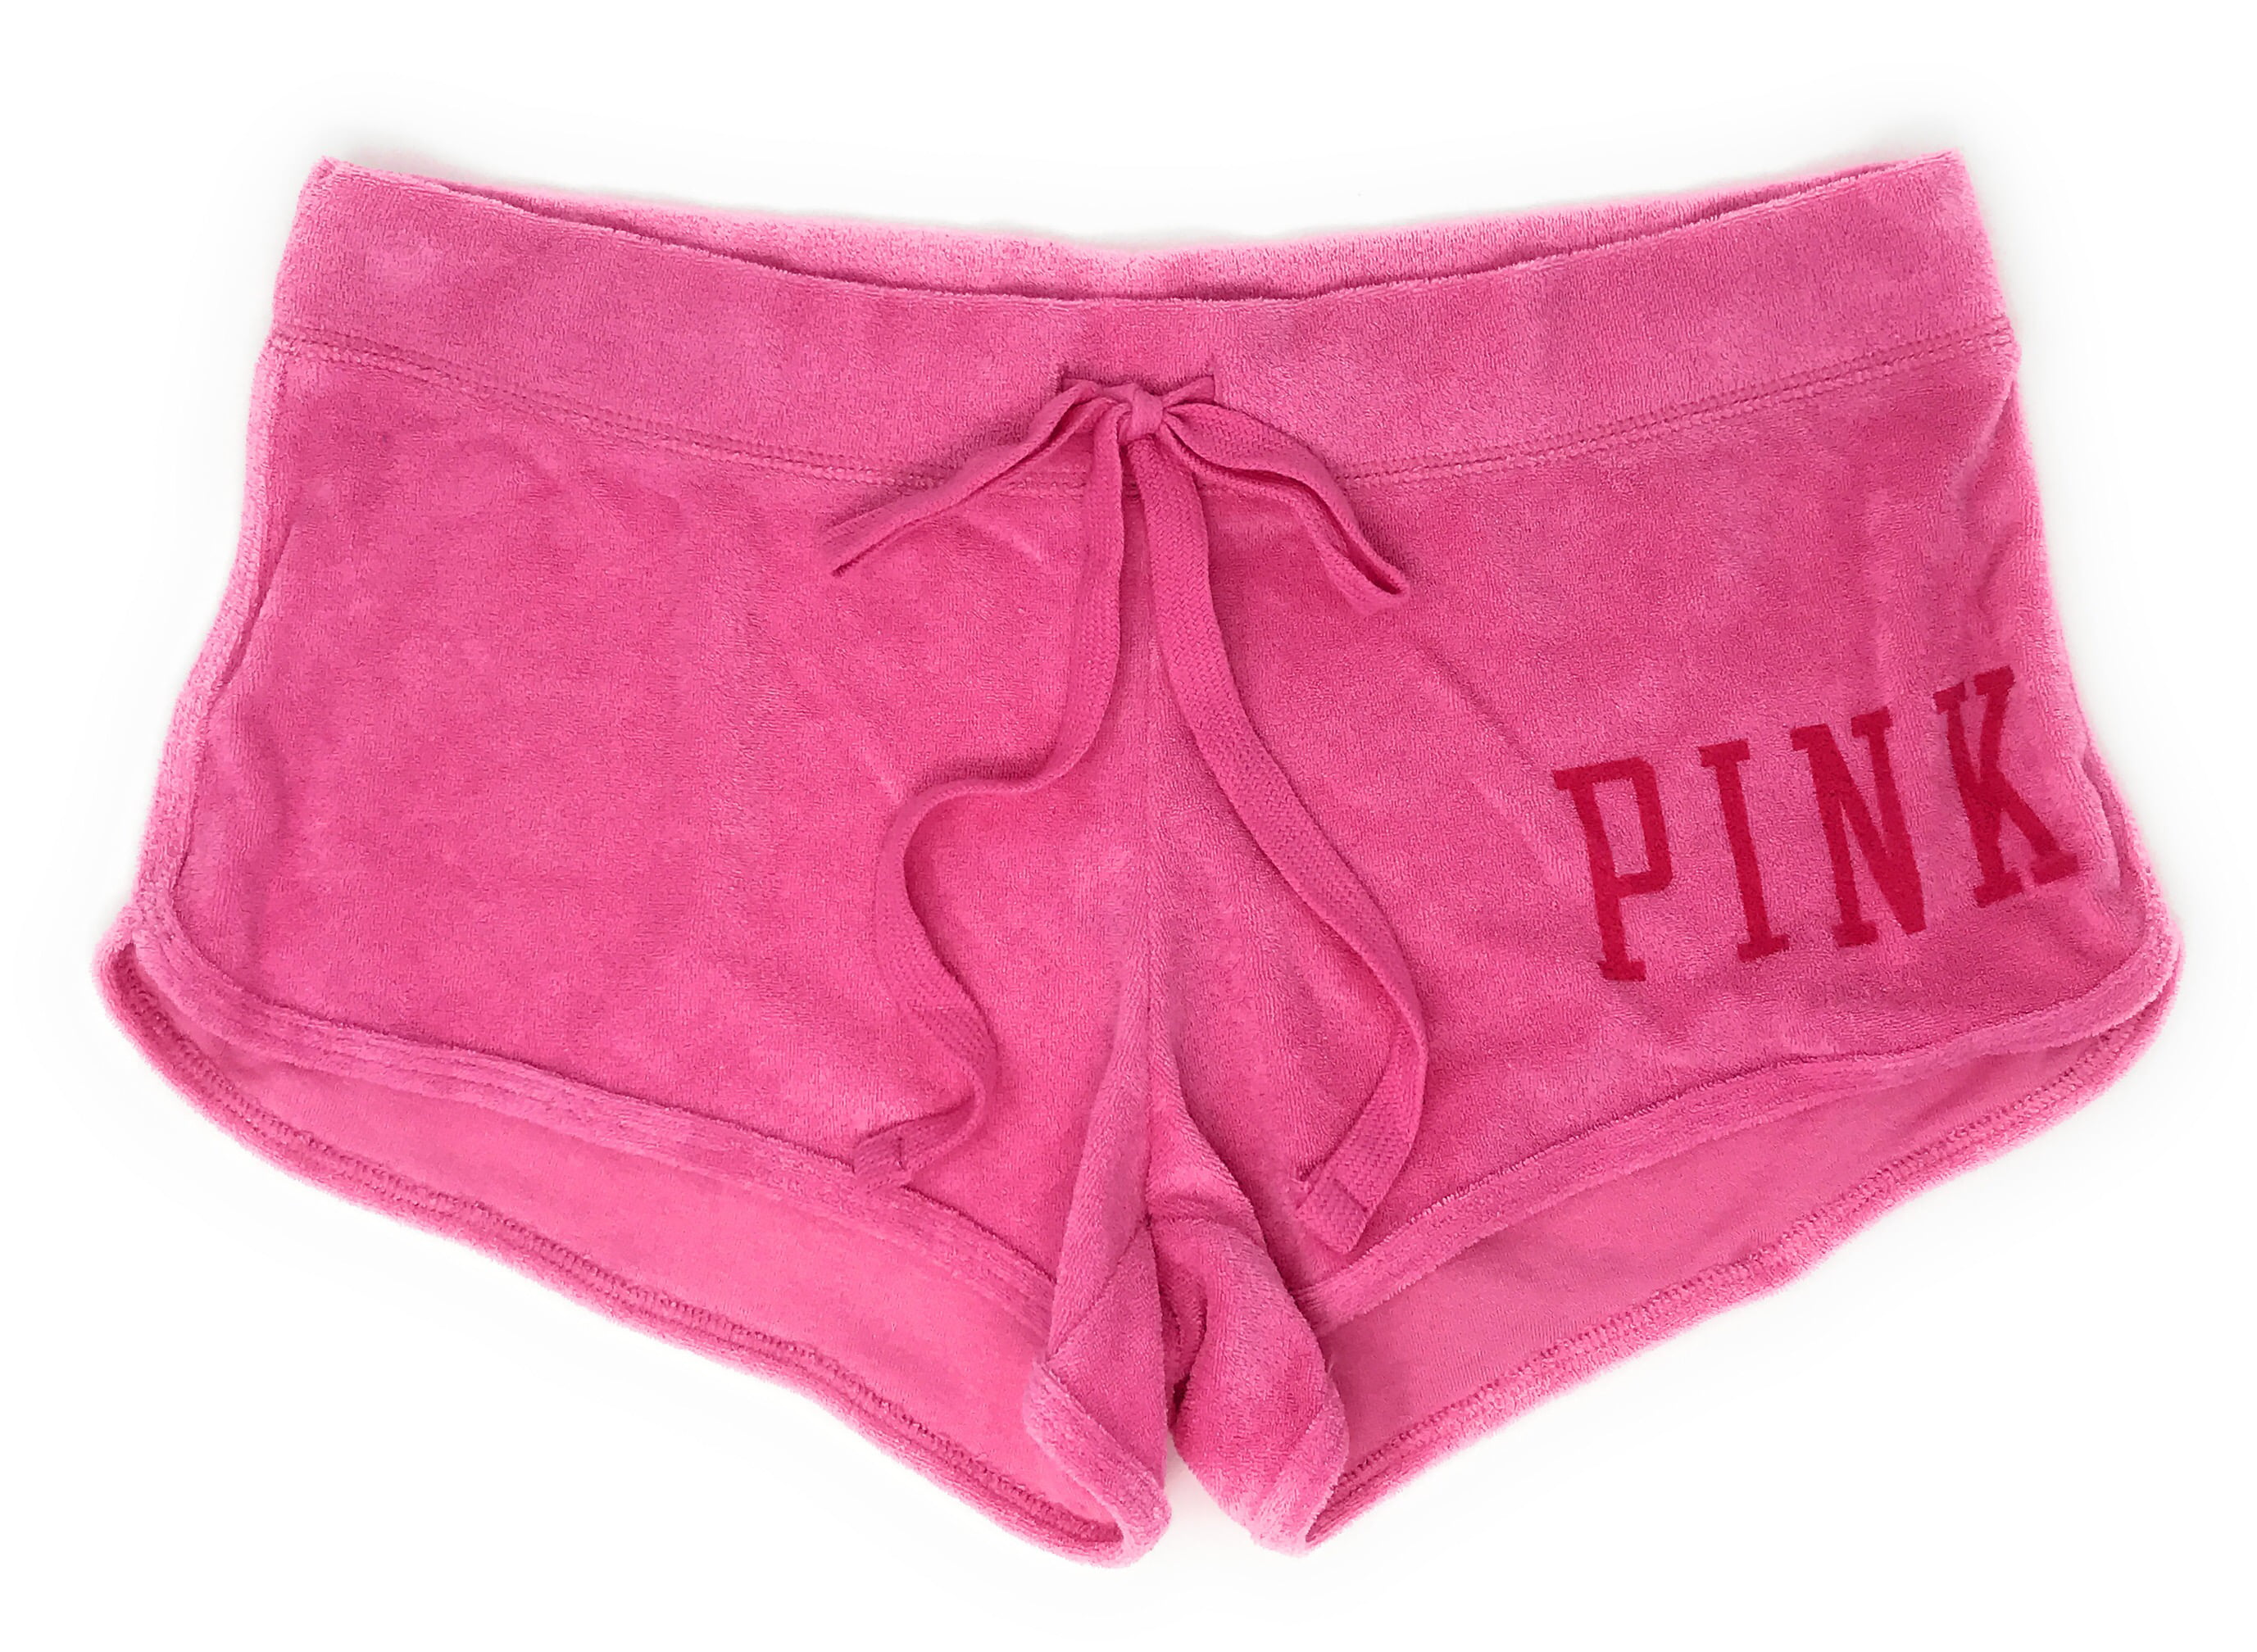 Victoria's Secret PINK Lounge Shorts